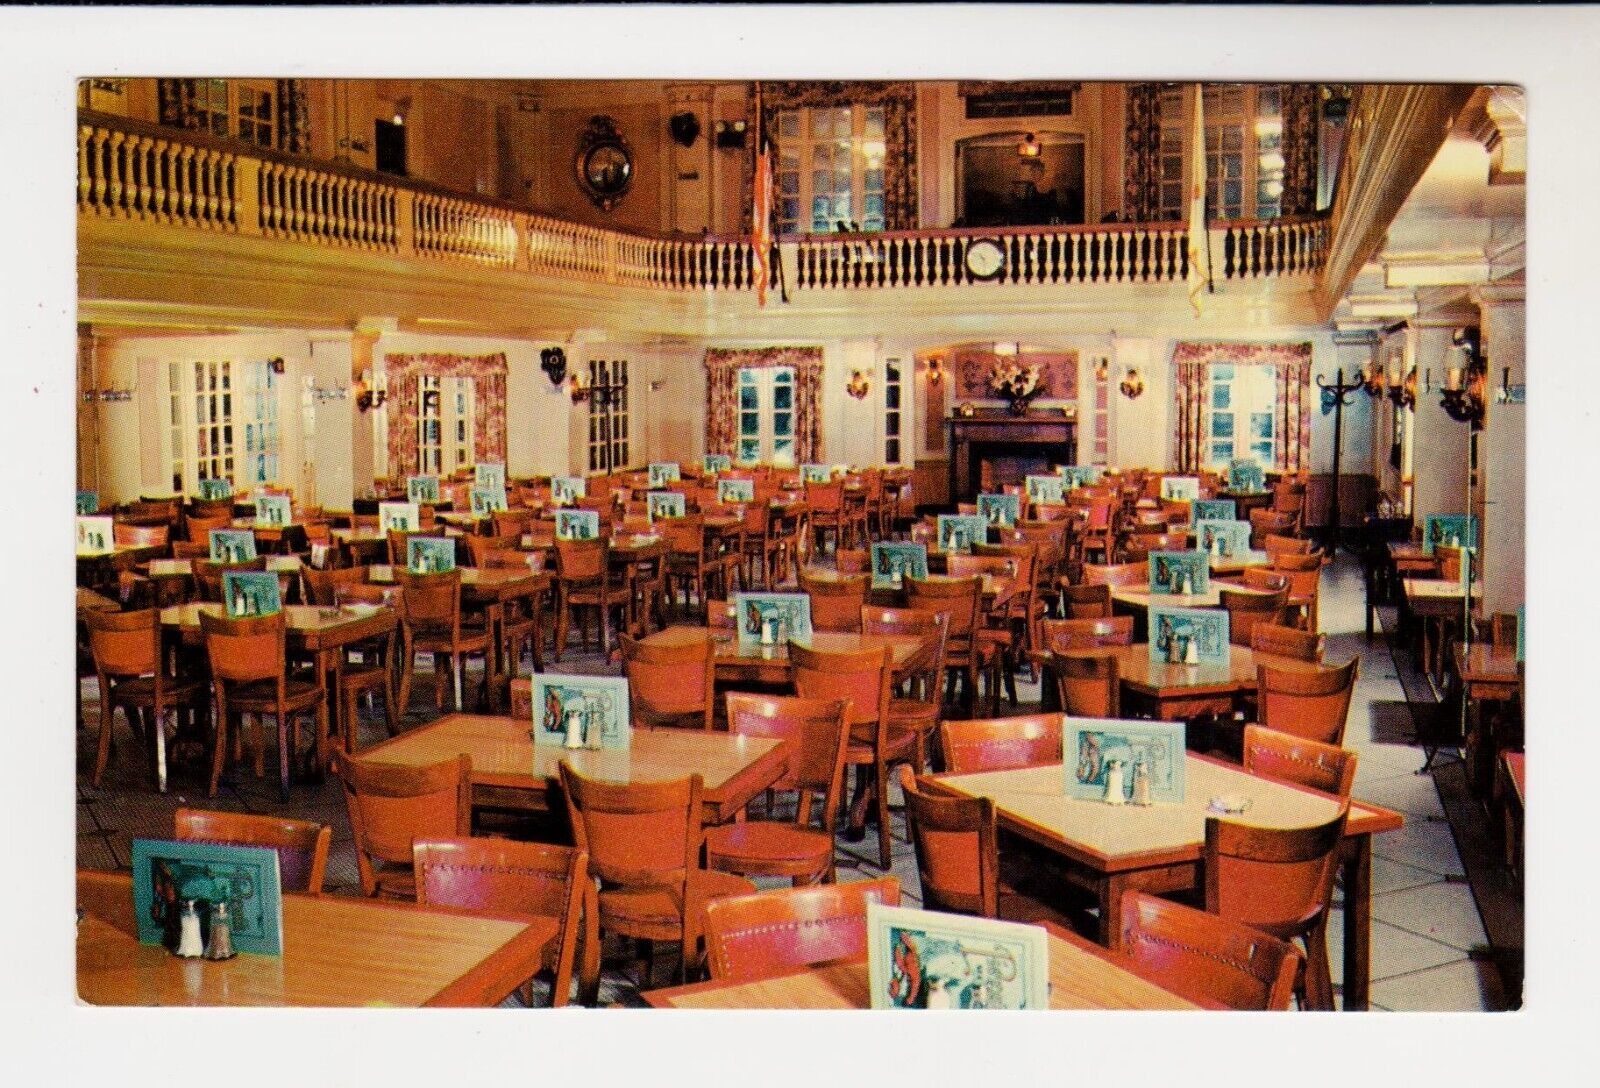 PIERONI’S RESTAURANT and HOTEL, 7 PARK SQUARE, BOSTON, MASS. – 1950s Postcard